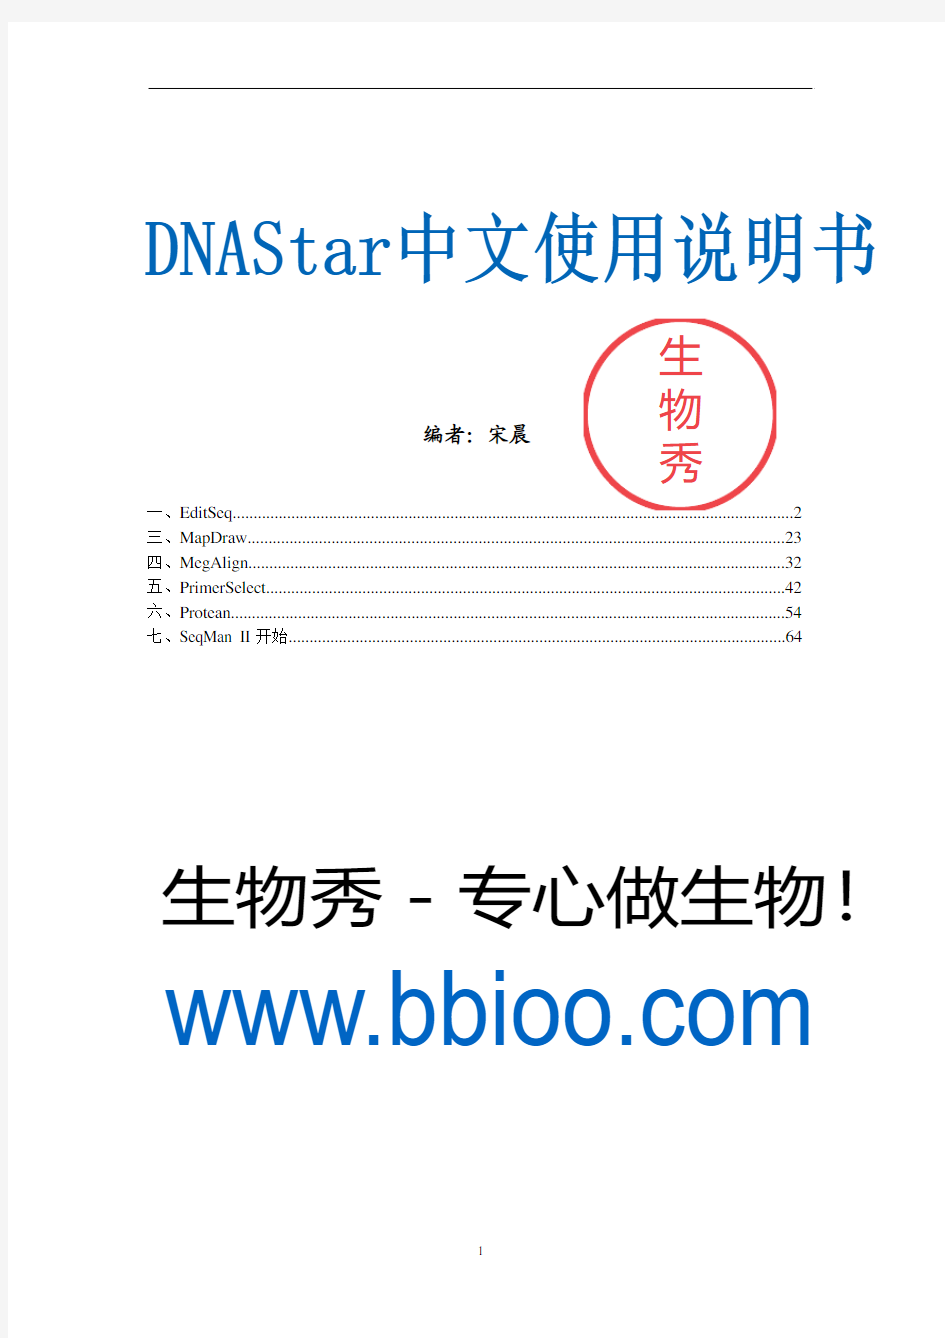 DNAStar中文说明书